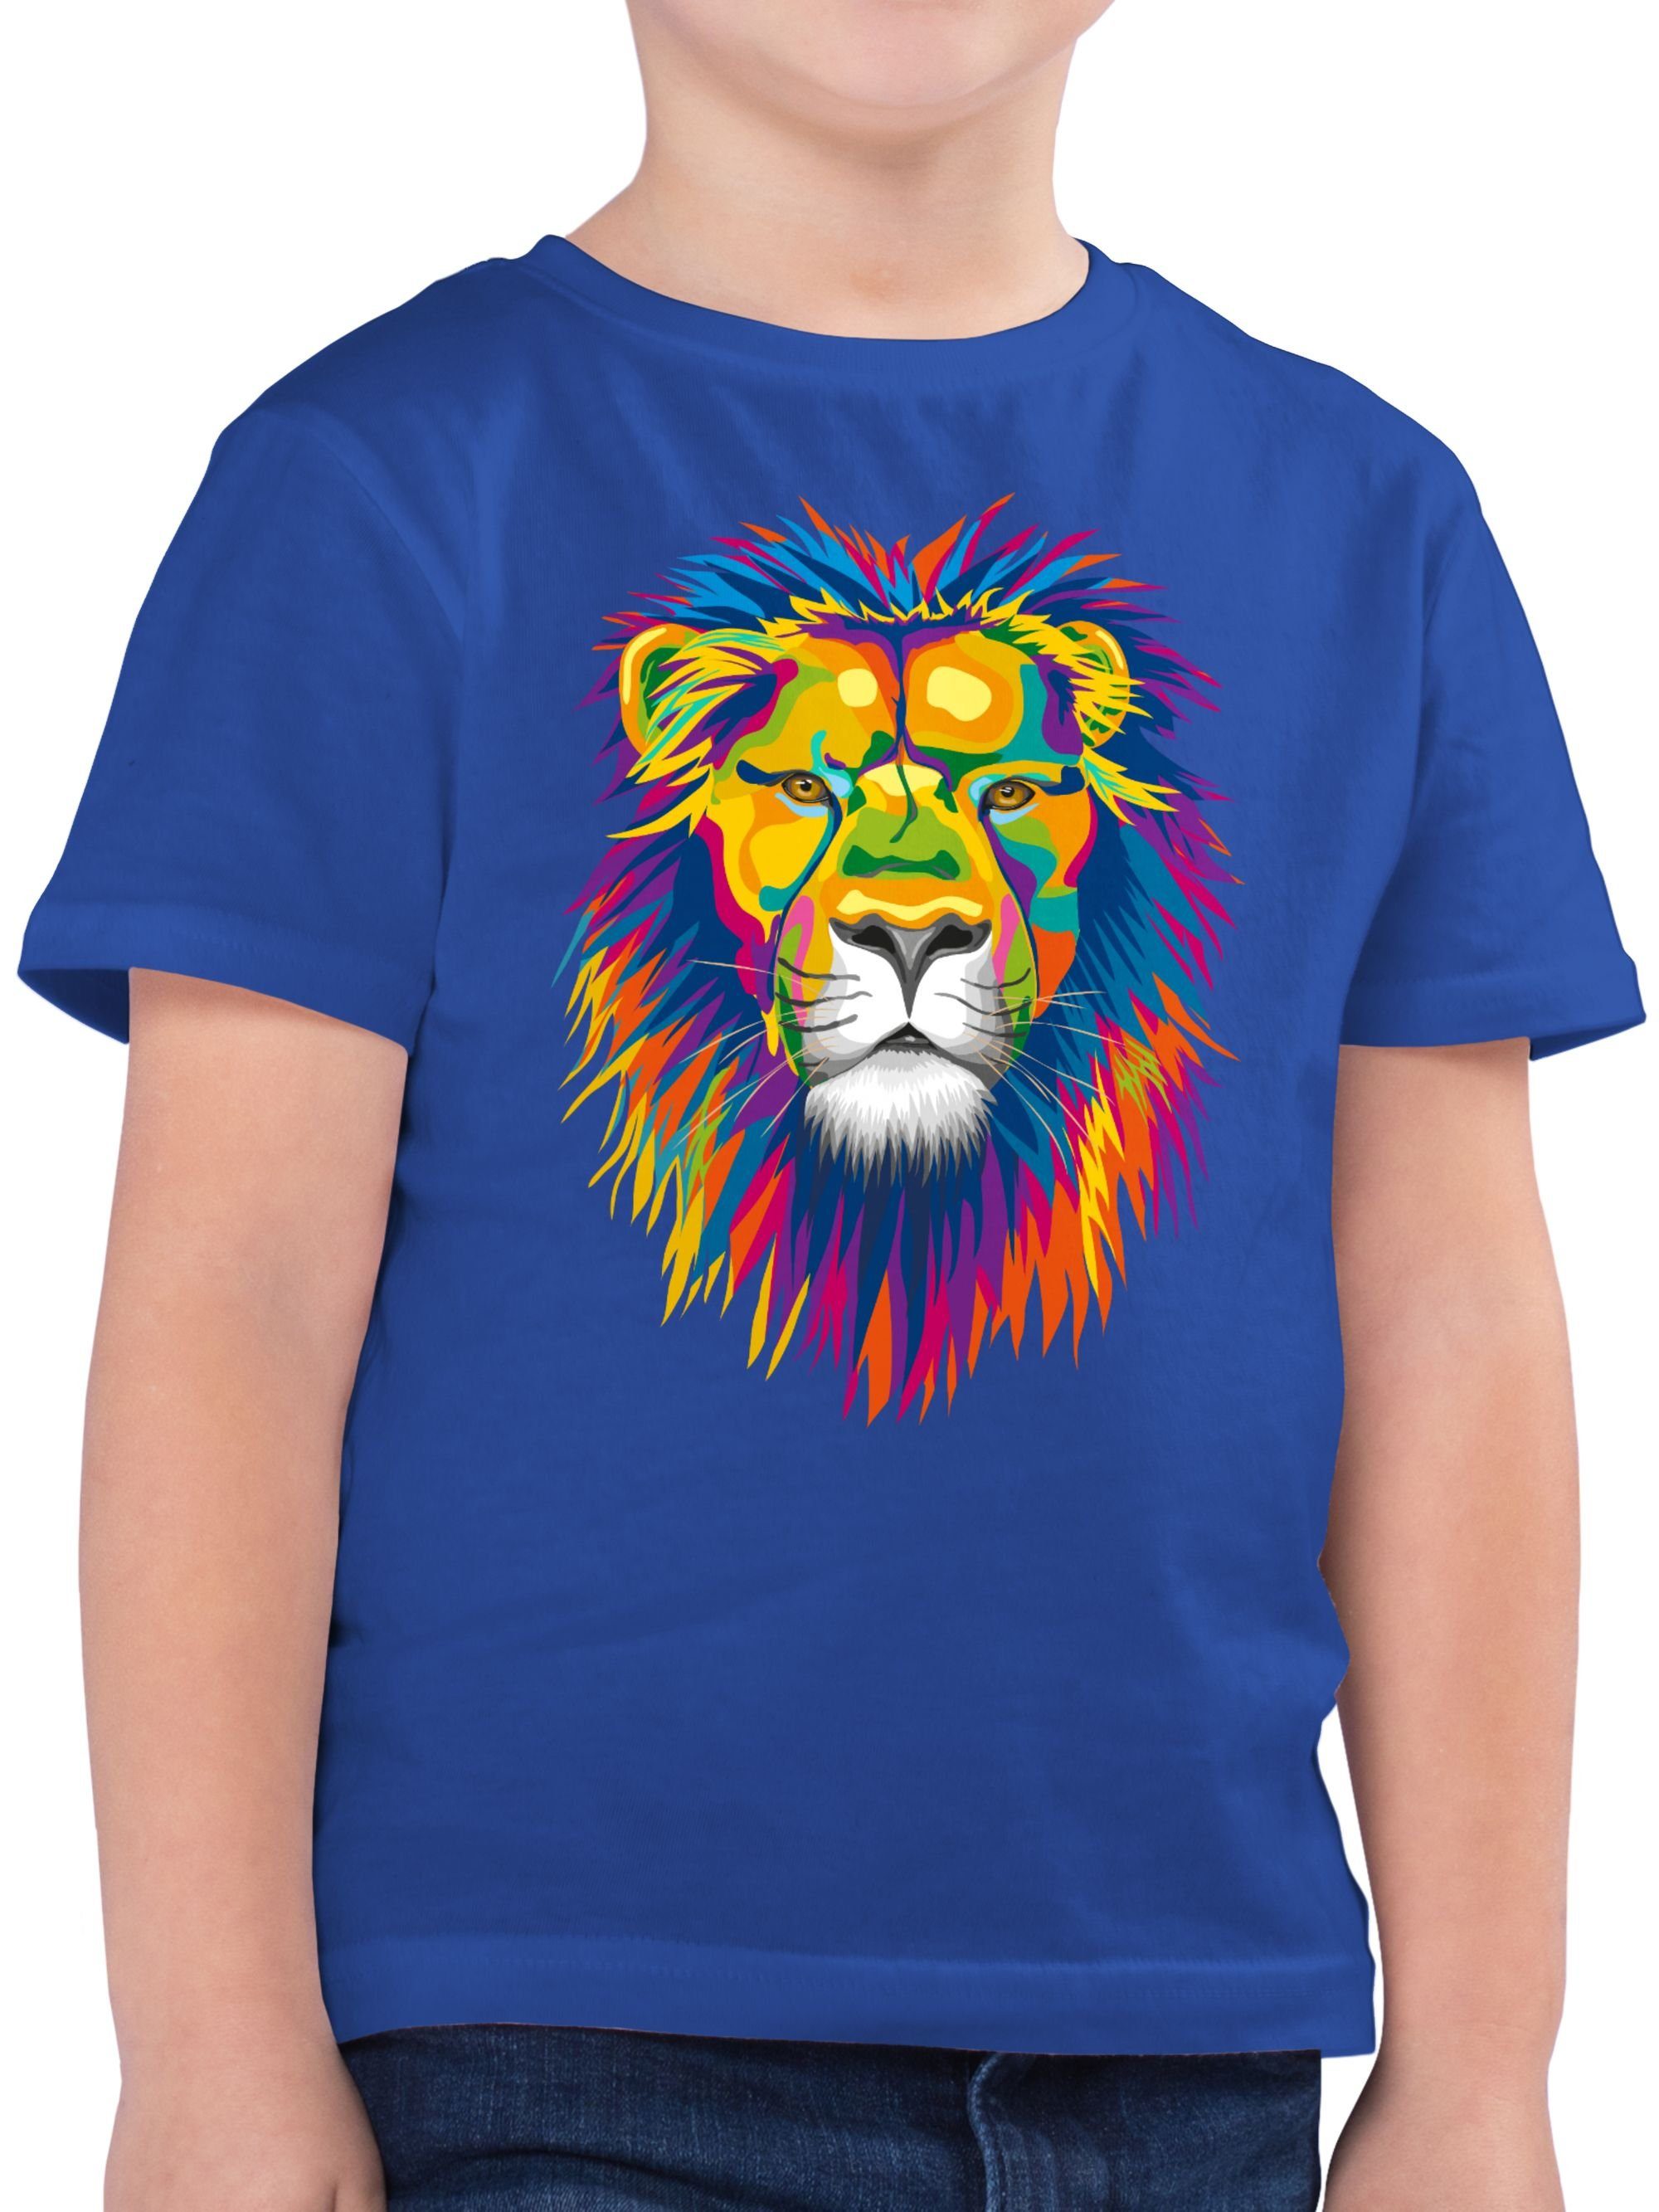 Günstig und beliebt Shirtracer T-Shirt Löwe Lion Animal Royalblau Print Tiermotiv 03